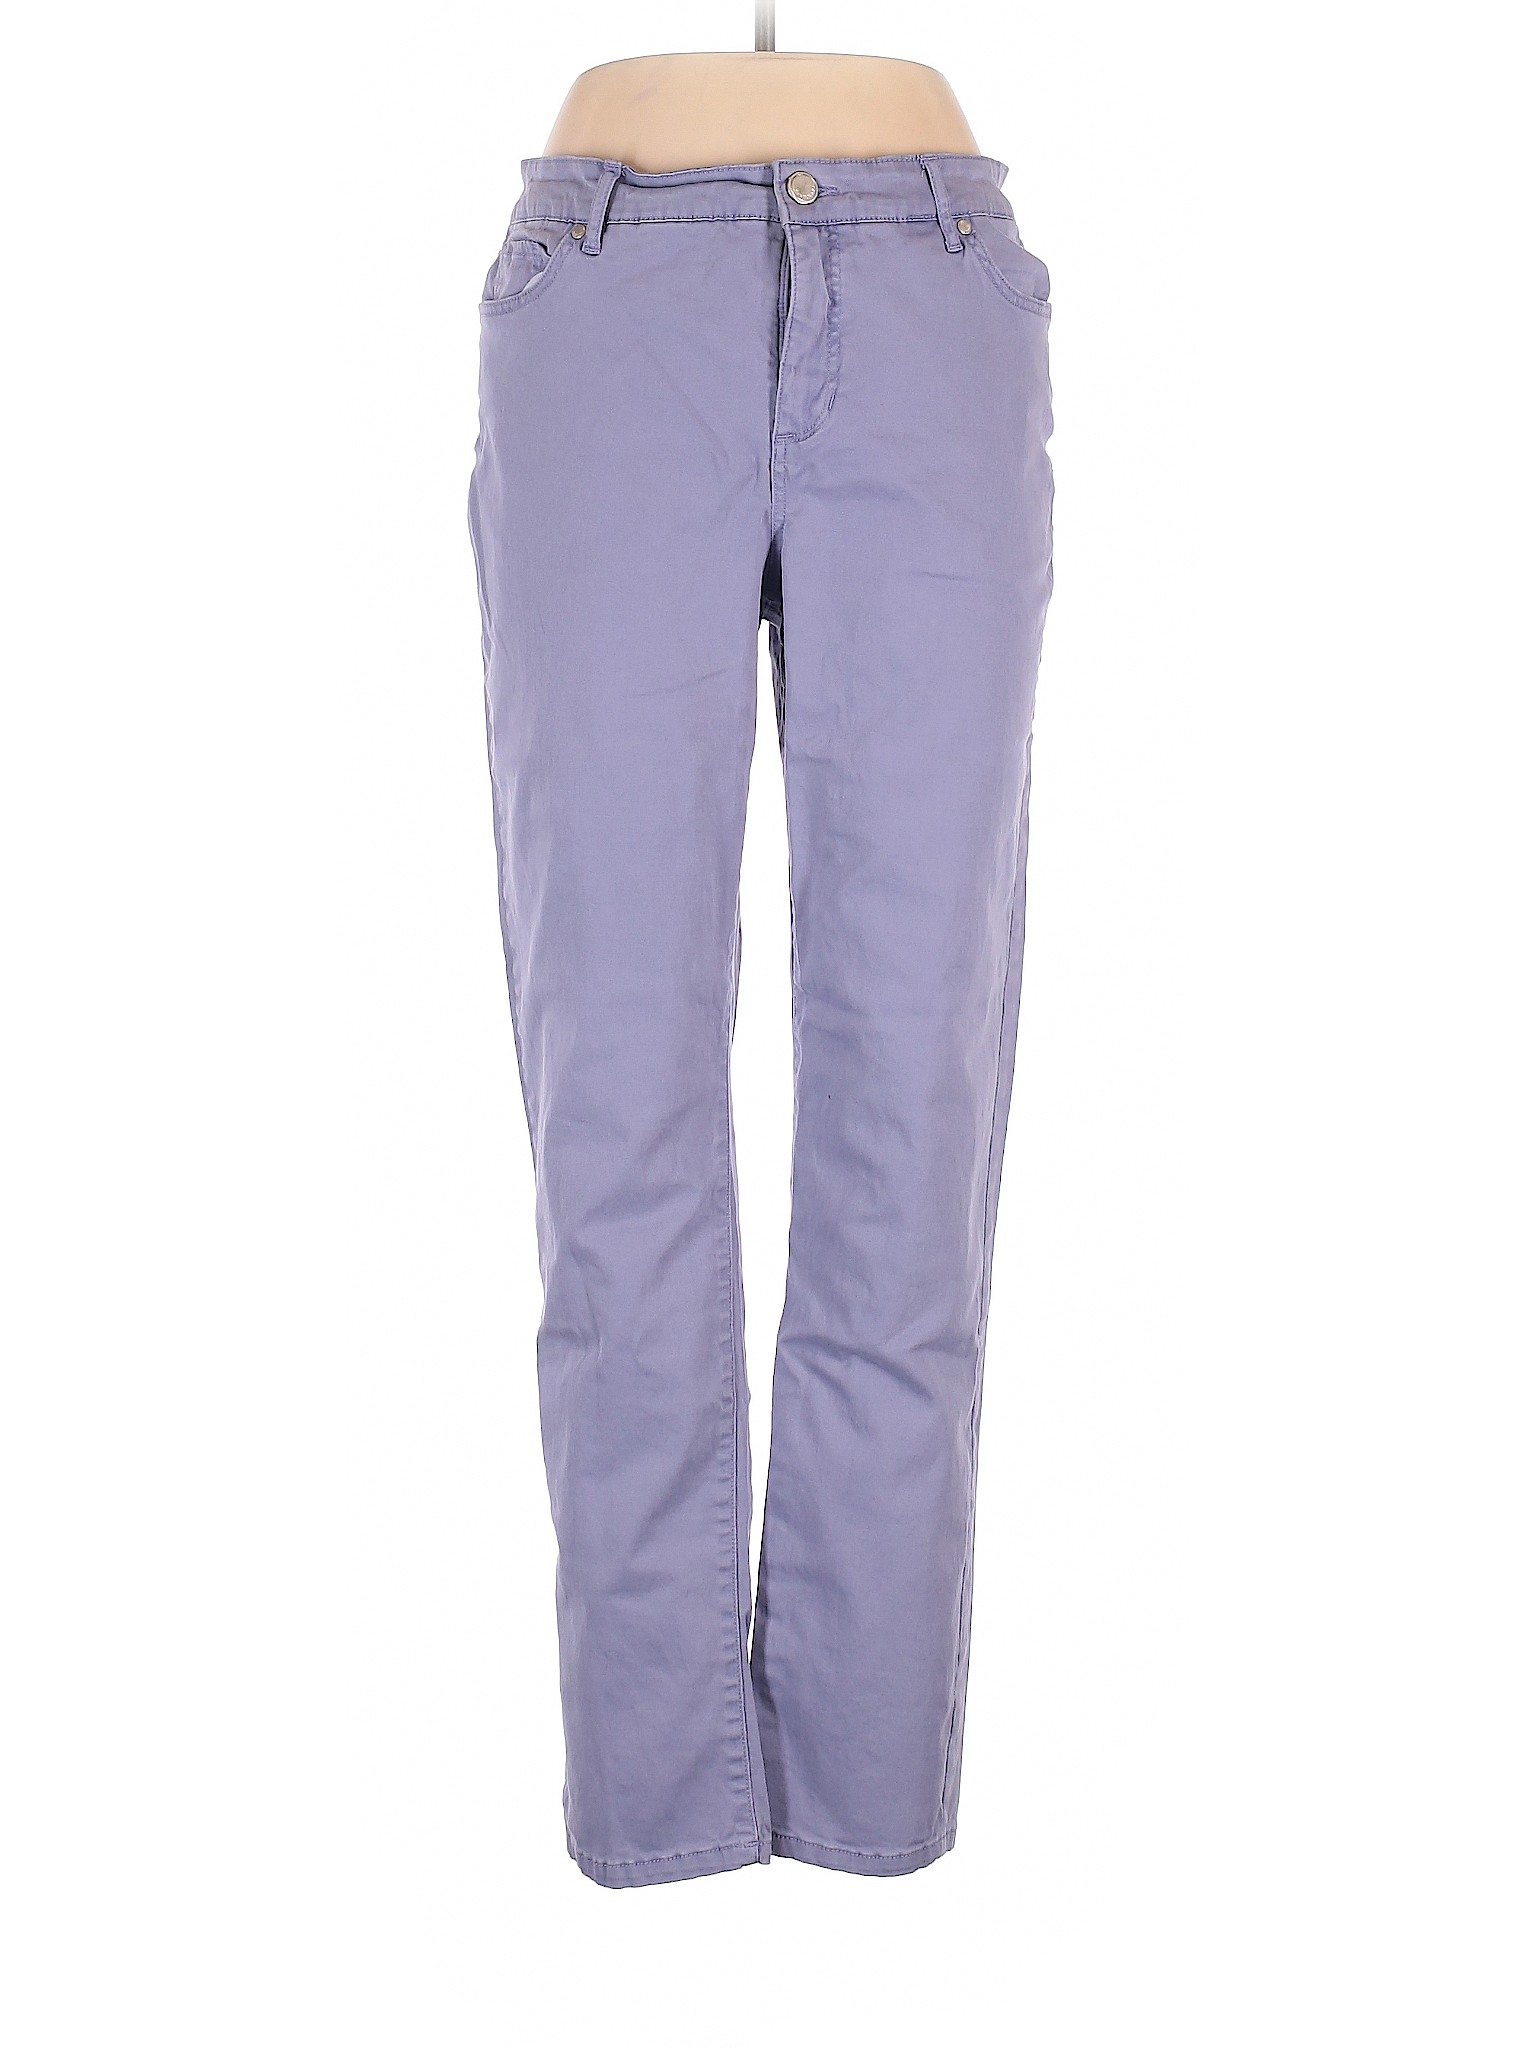 Bandolino Women Purple Jeans 12 | eBay